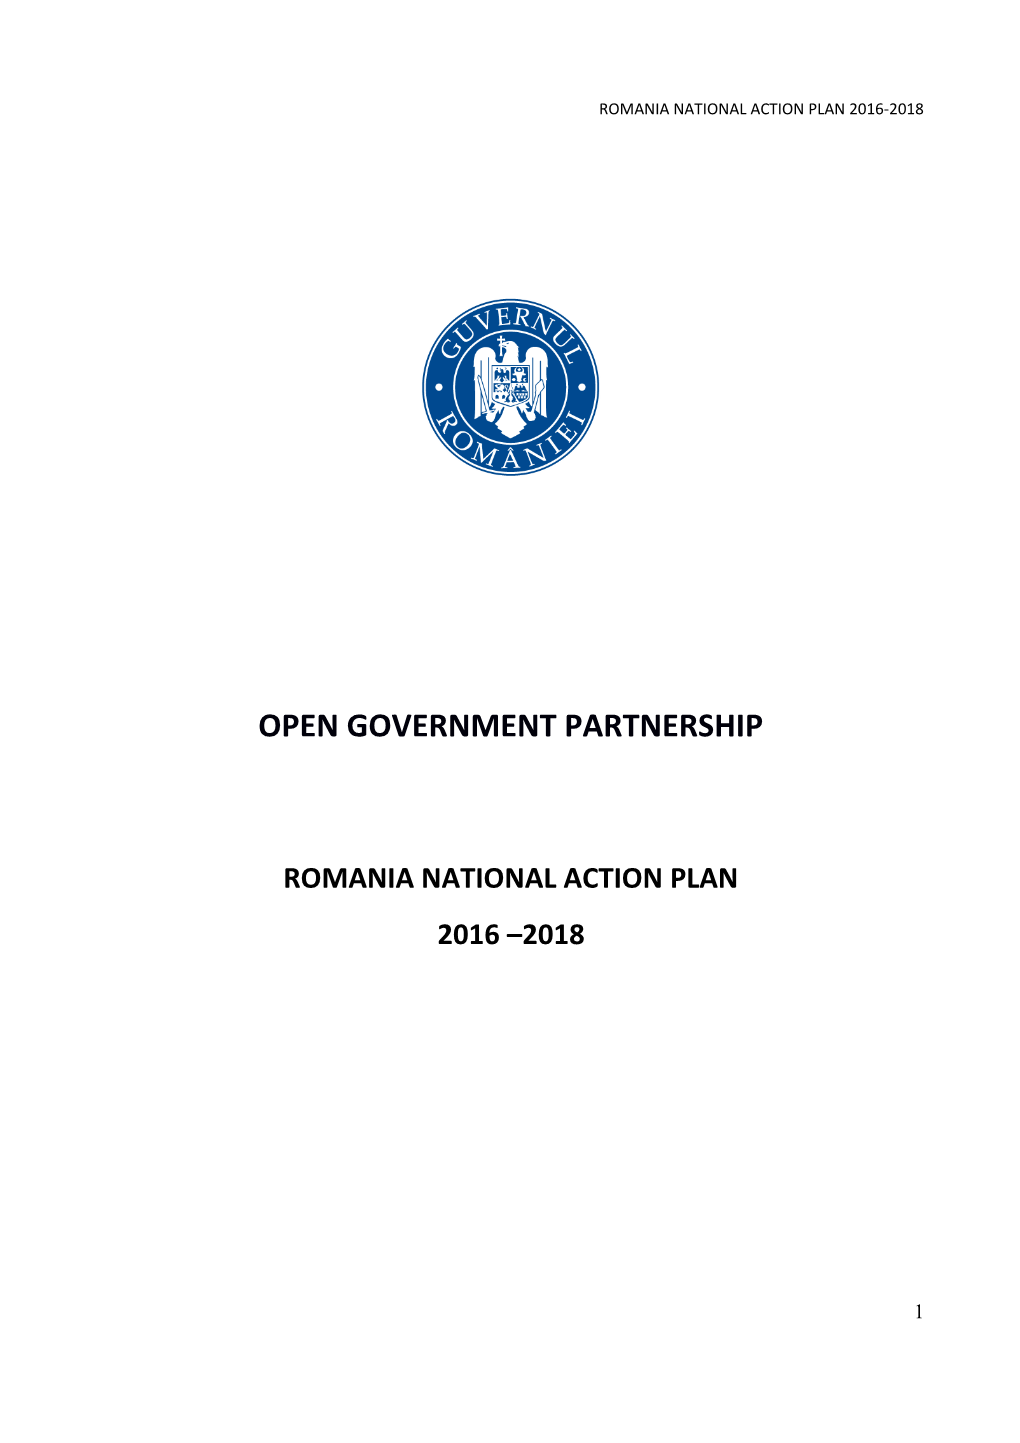 Romania National Action Plan 2016-2018